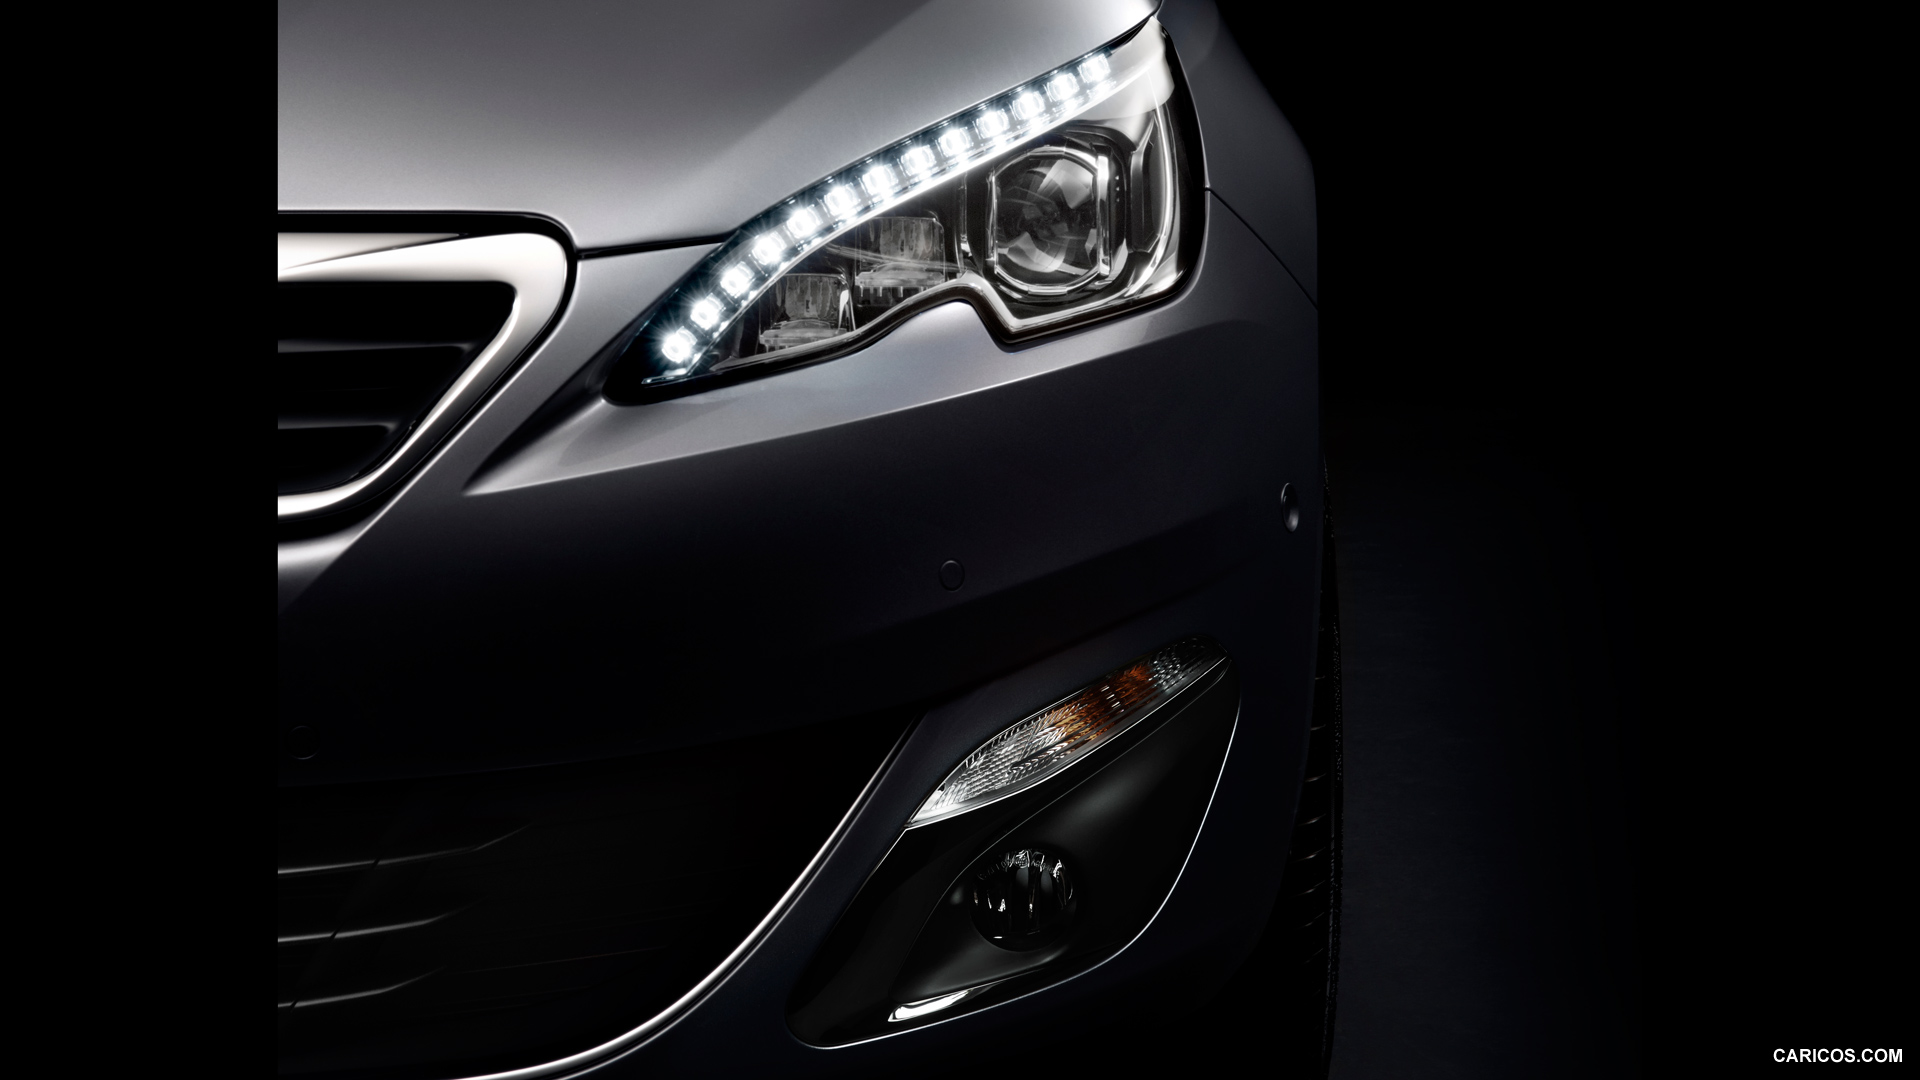 Peugeot Headlight HD Wallpaper